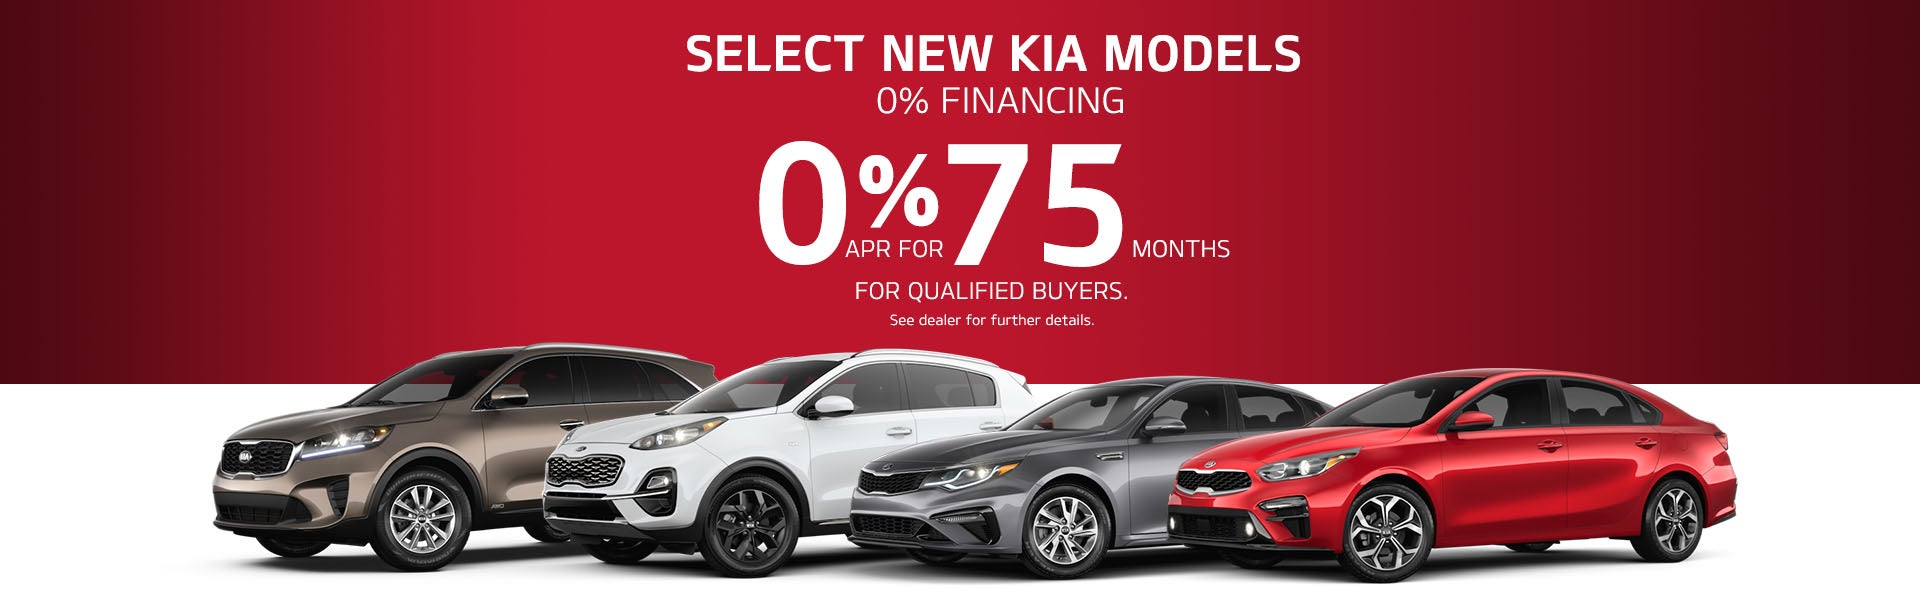 Select New Kia Models